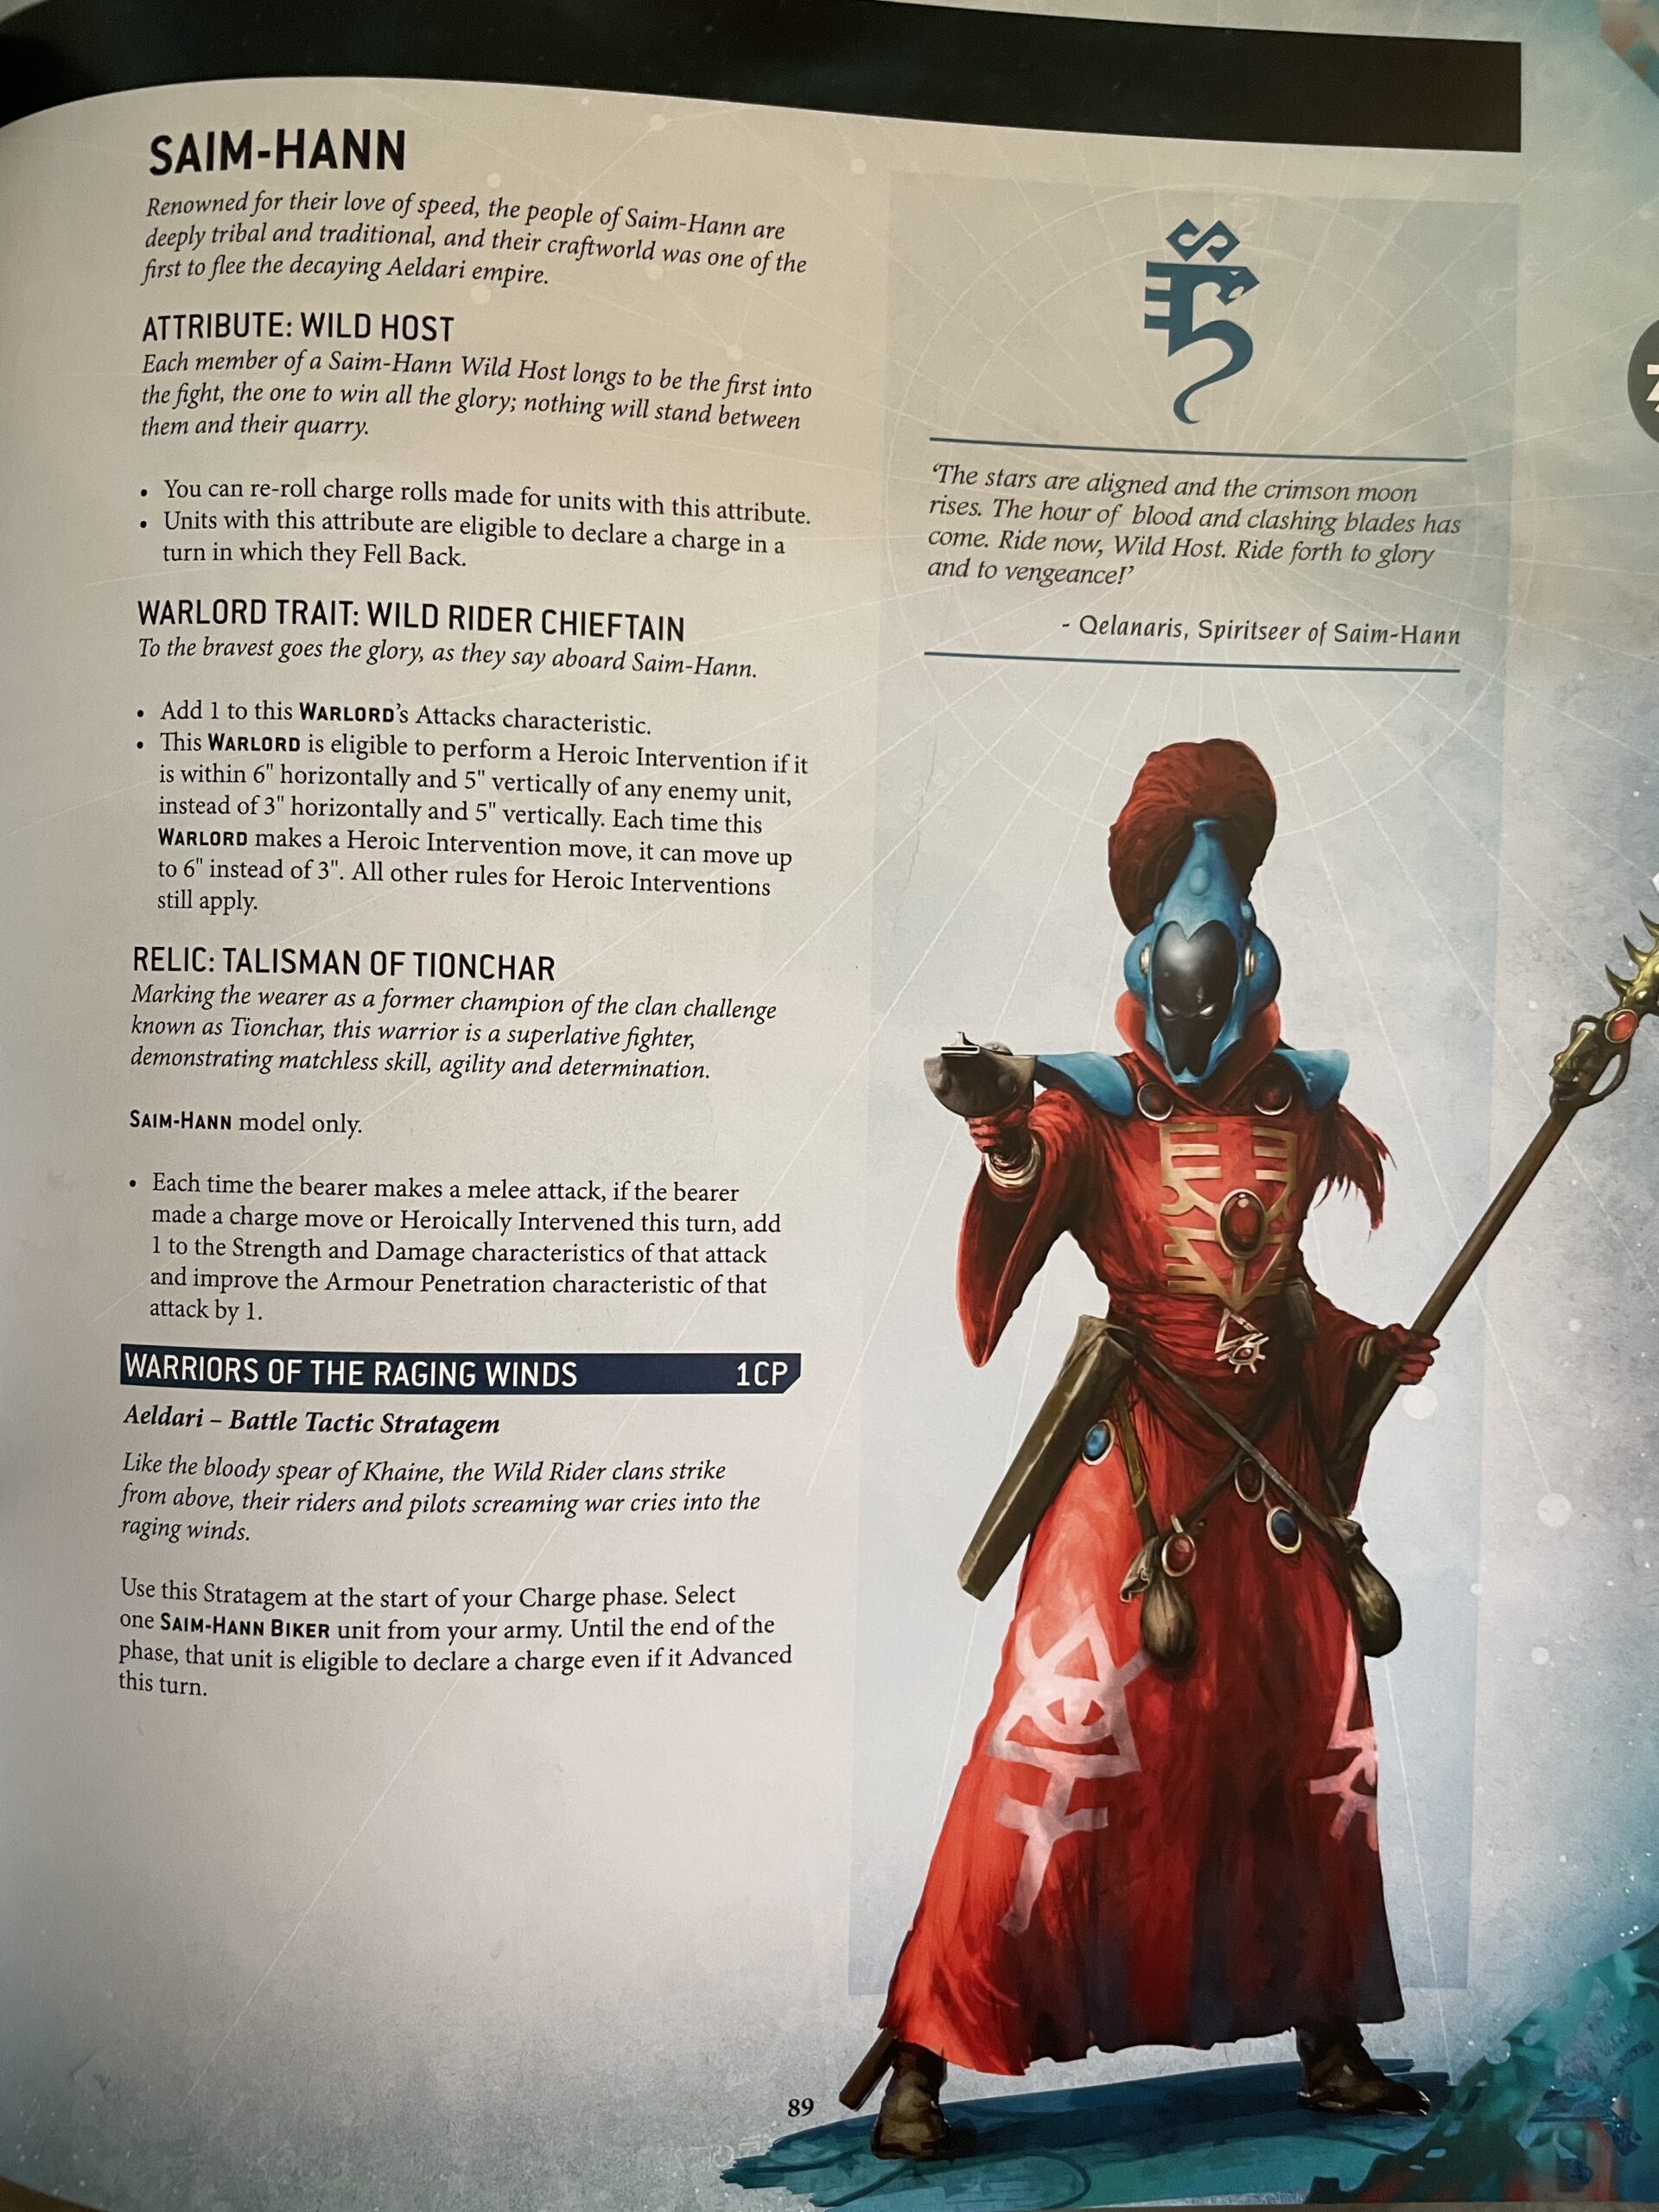 New Eldar Craftworlds, Ynnari, & Harlequins Faction Rules